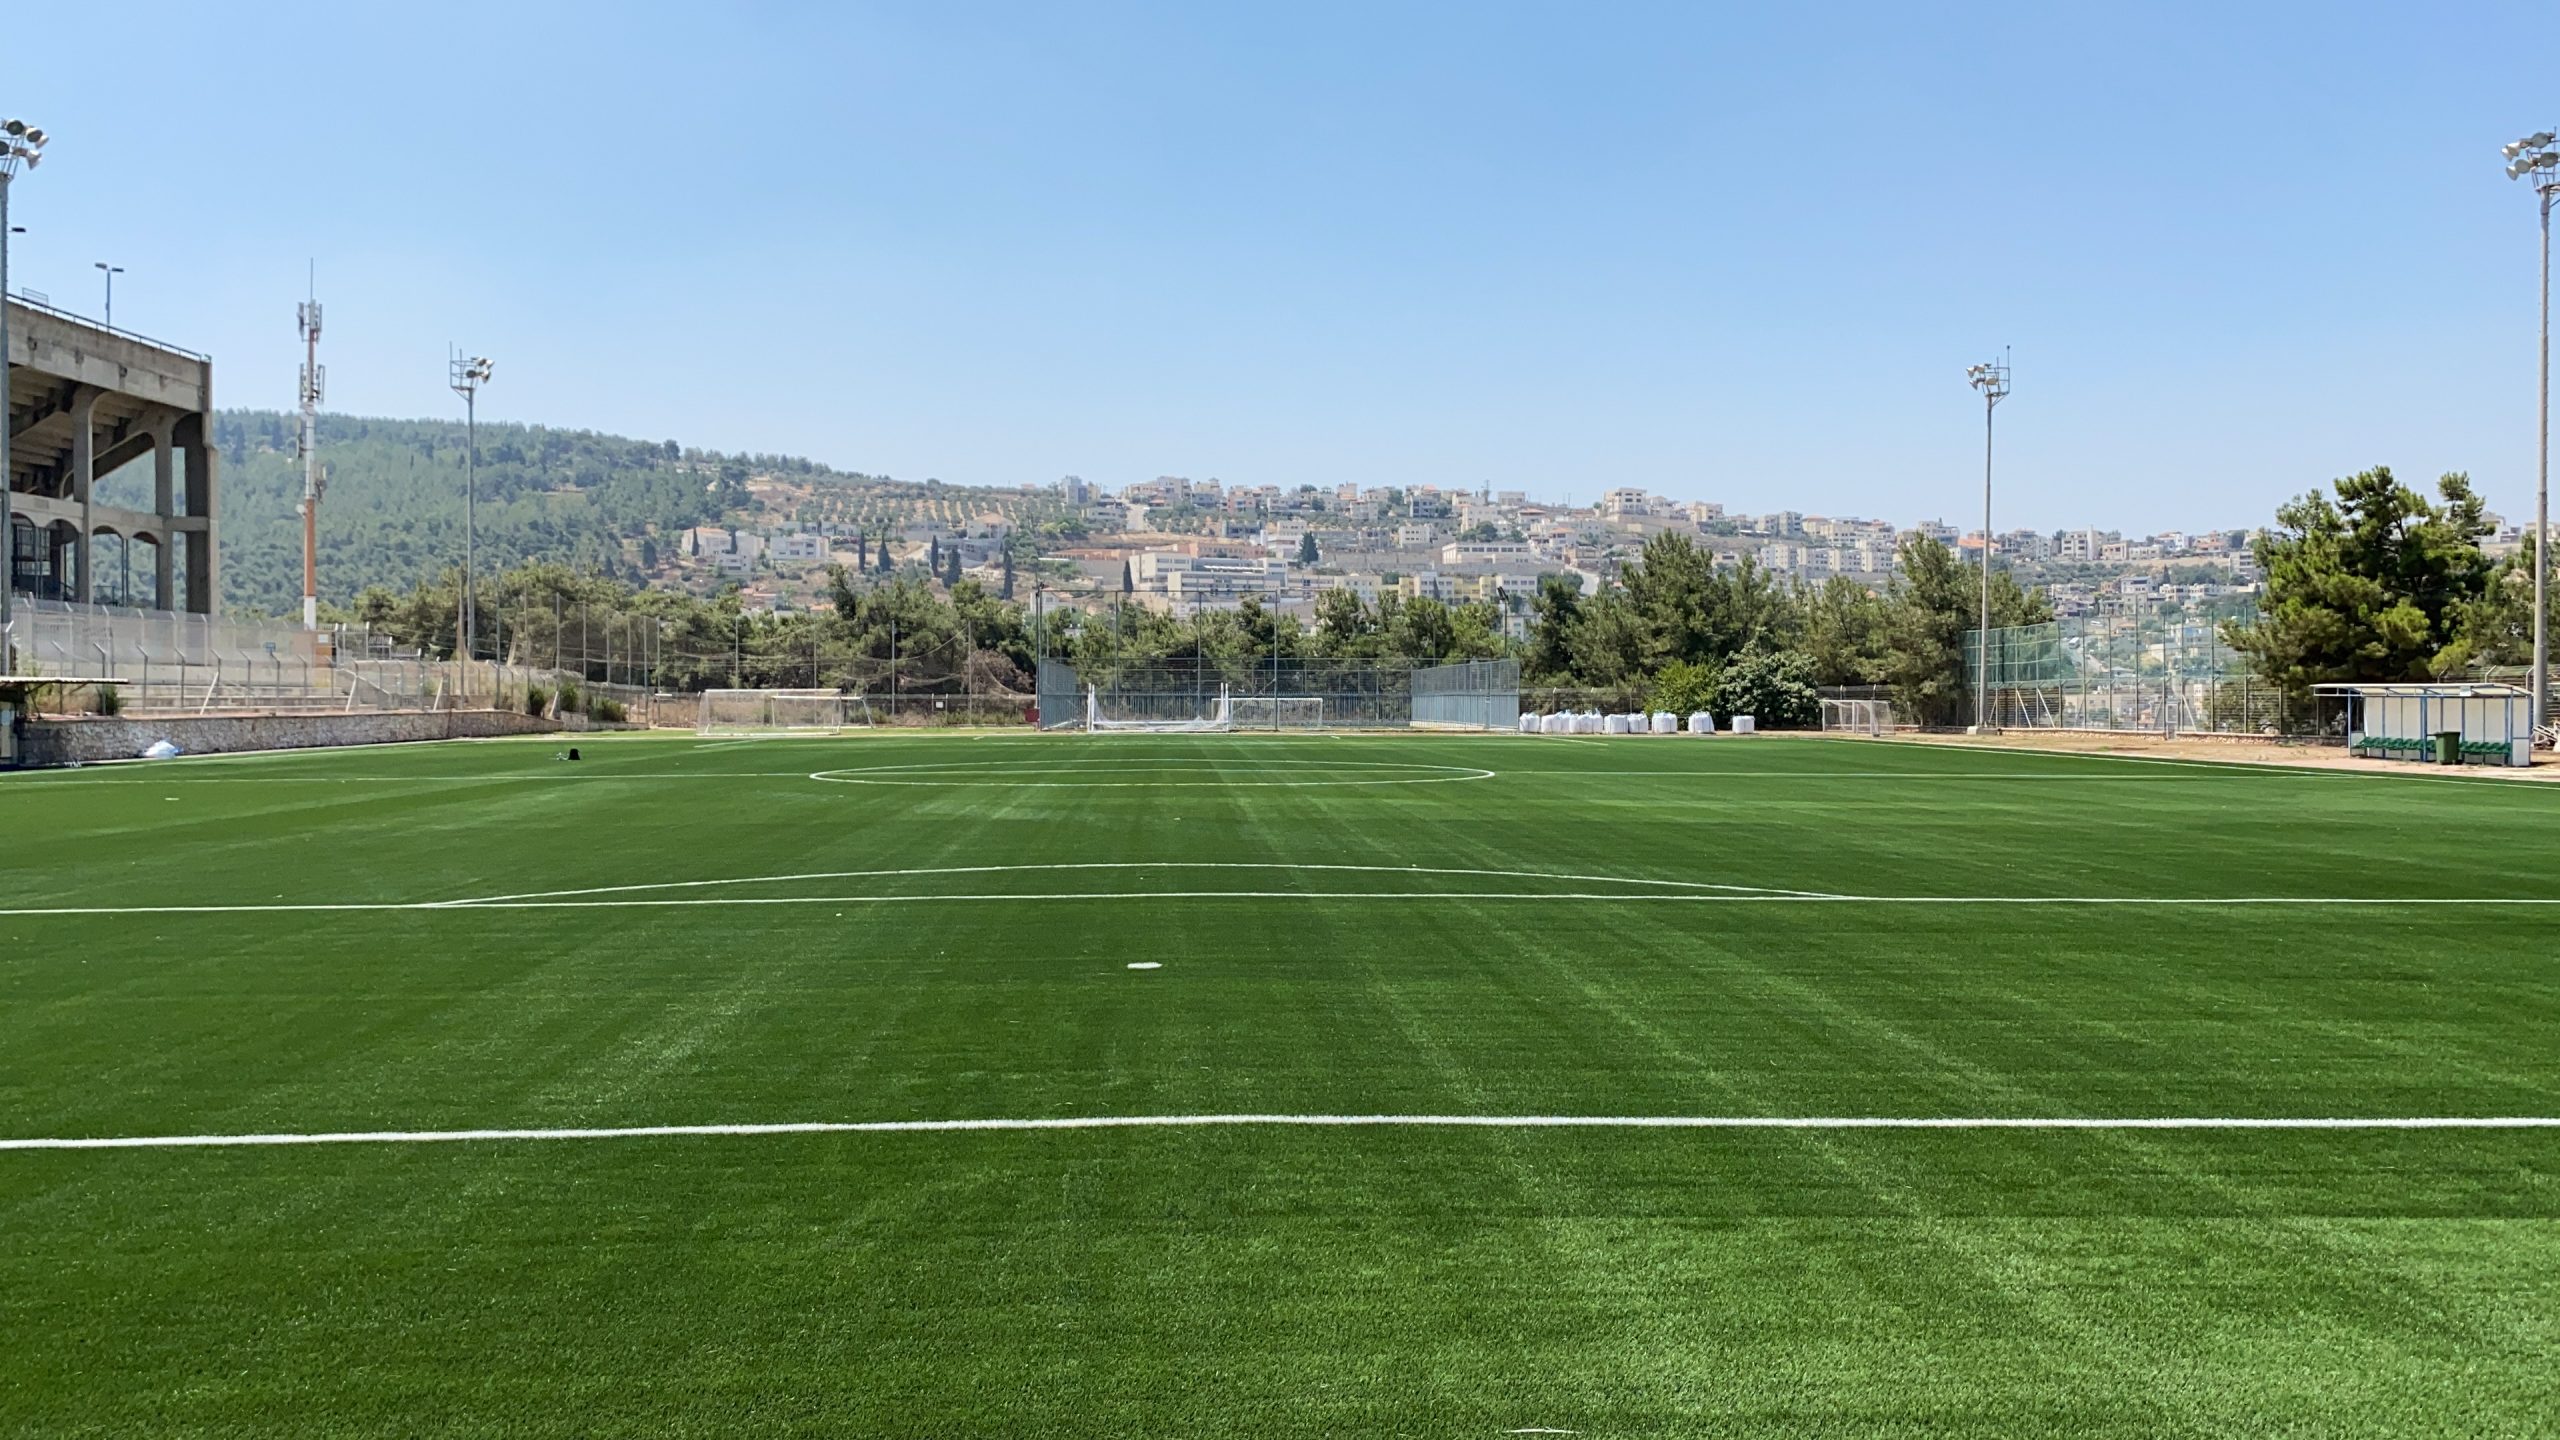 Ilot, Nazareth Stadium (Israel)